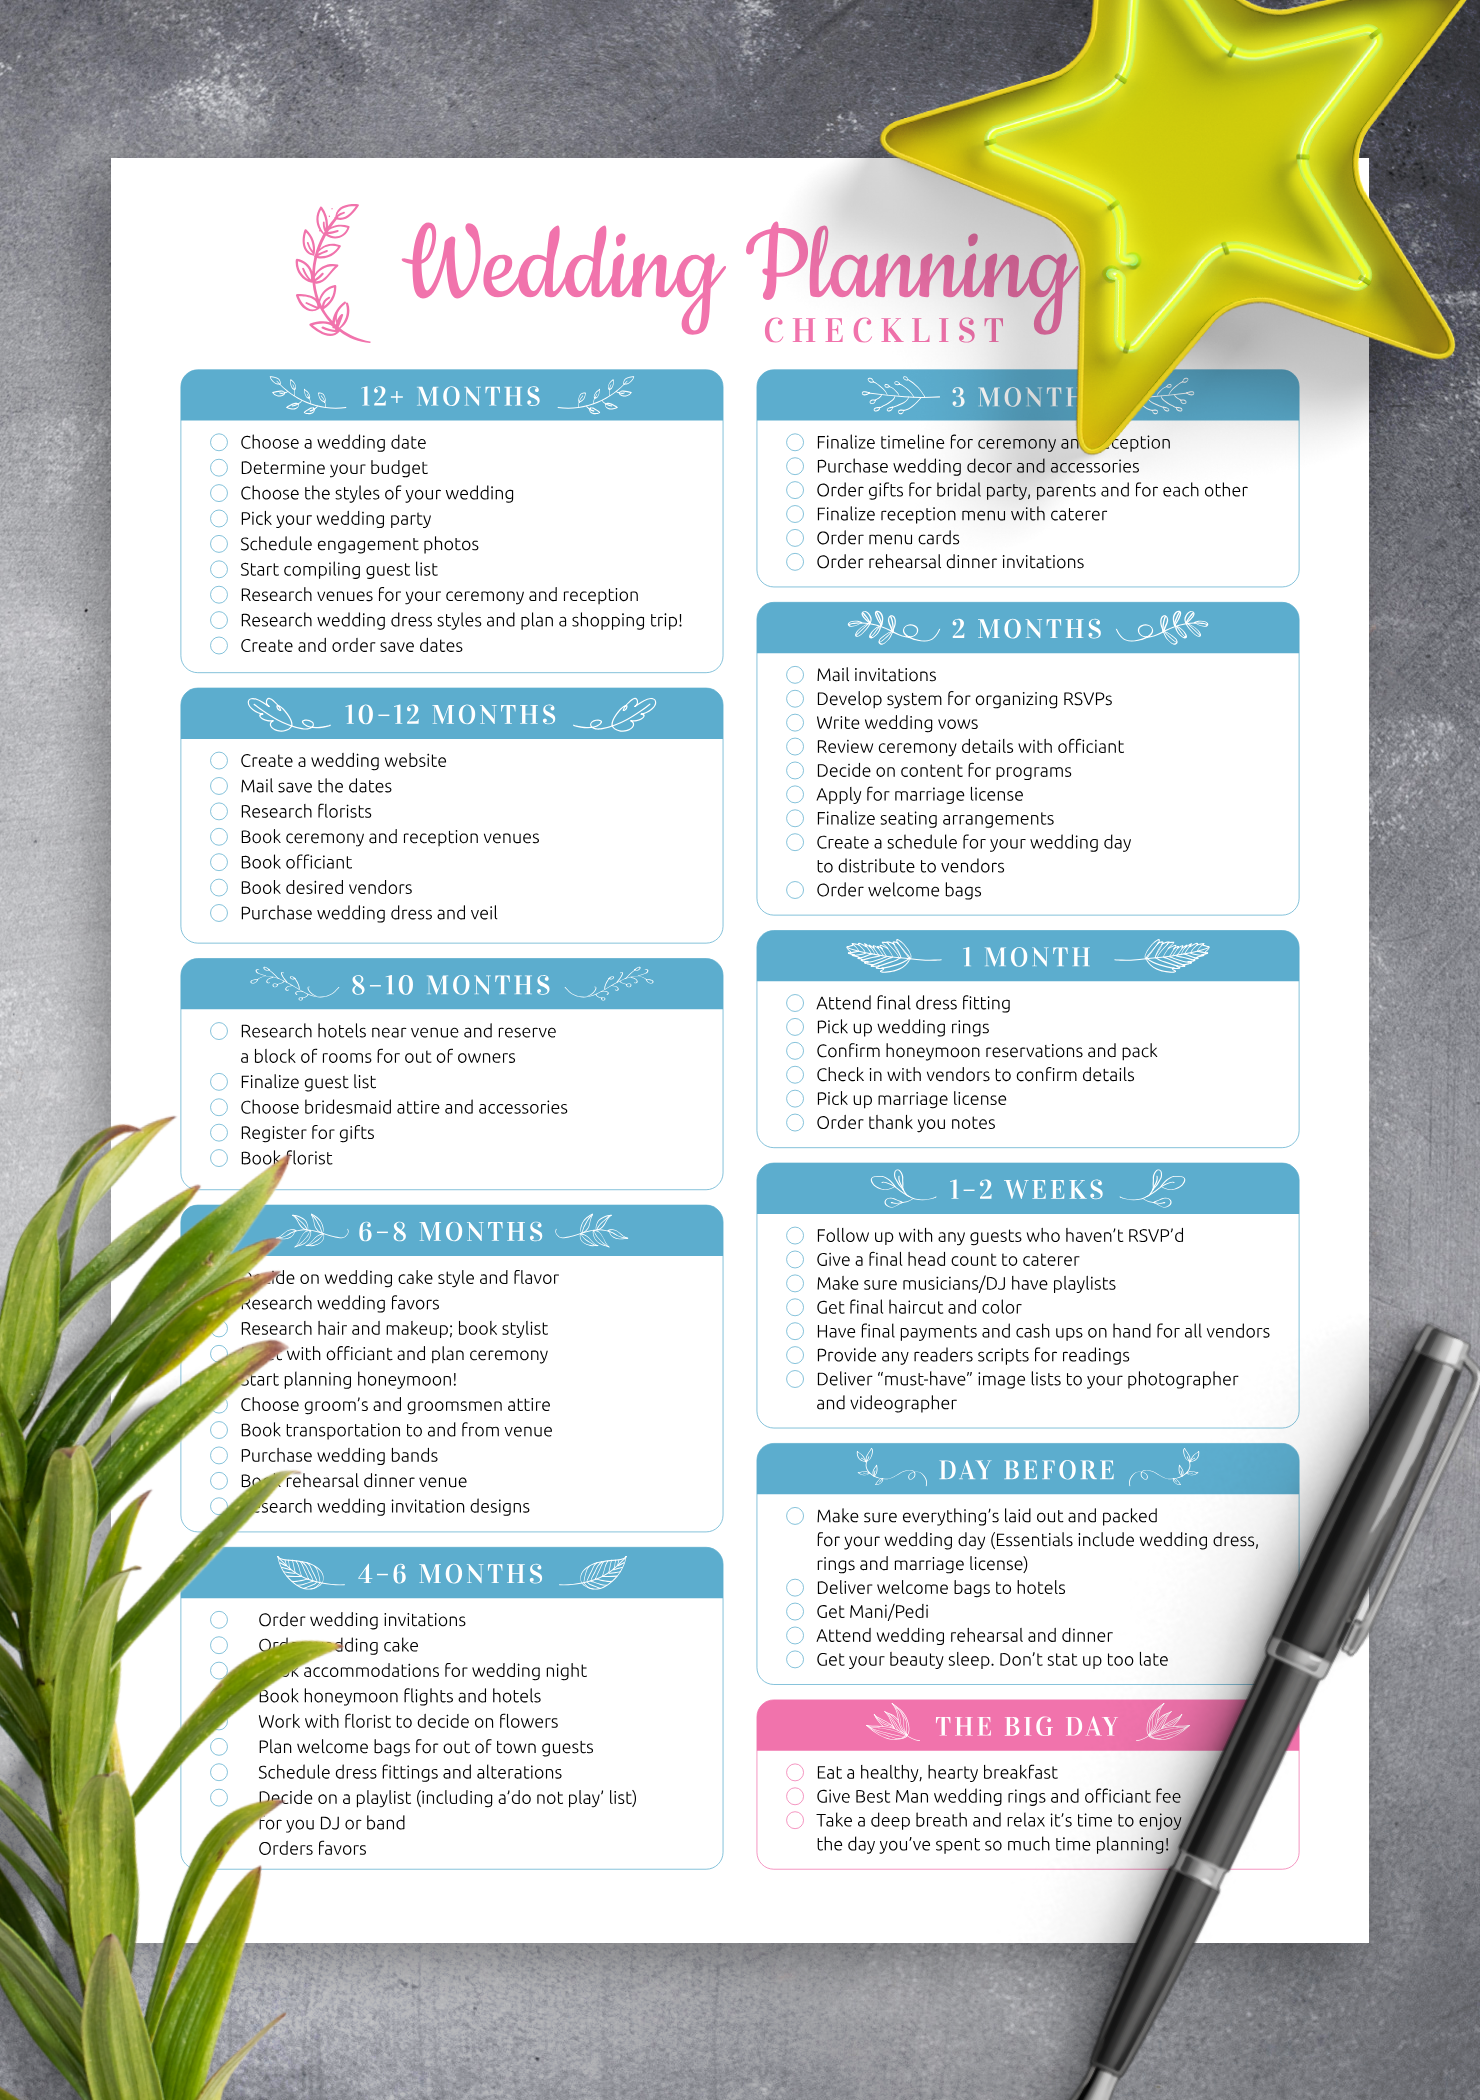 Download Printable Wedding Planning Checklist PDF For Wedding Photo Checklist Template Intended For Wedding Photo Checklist Template